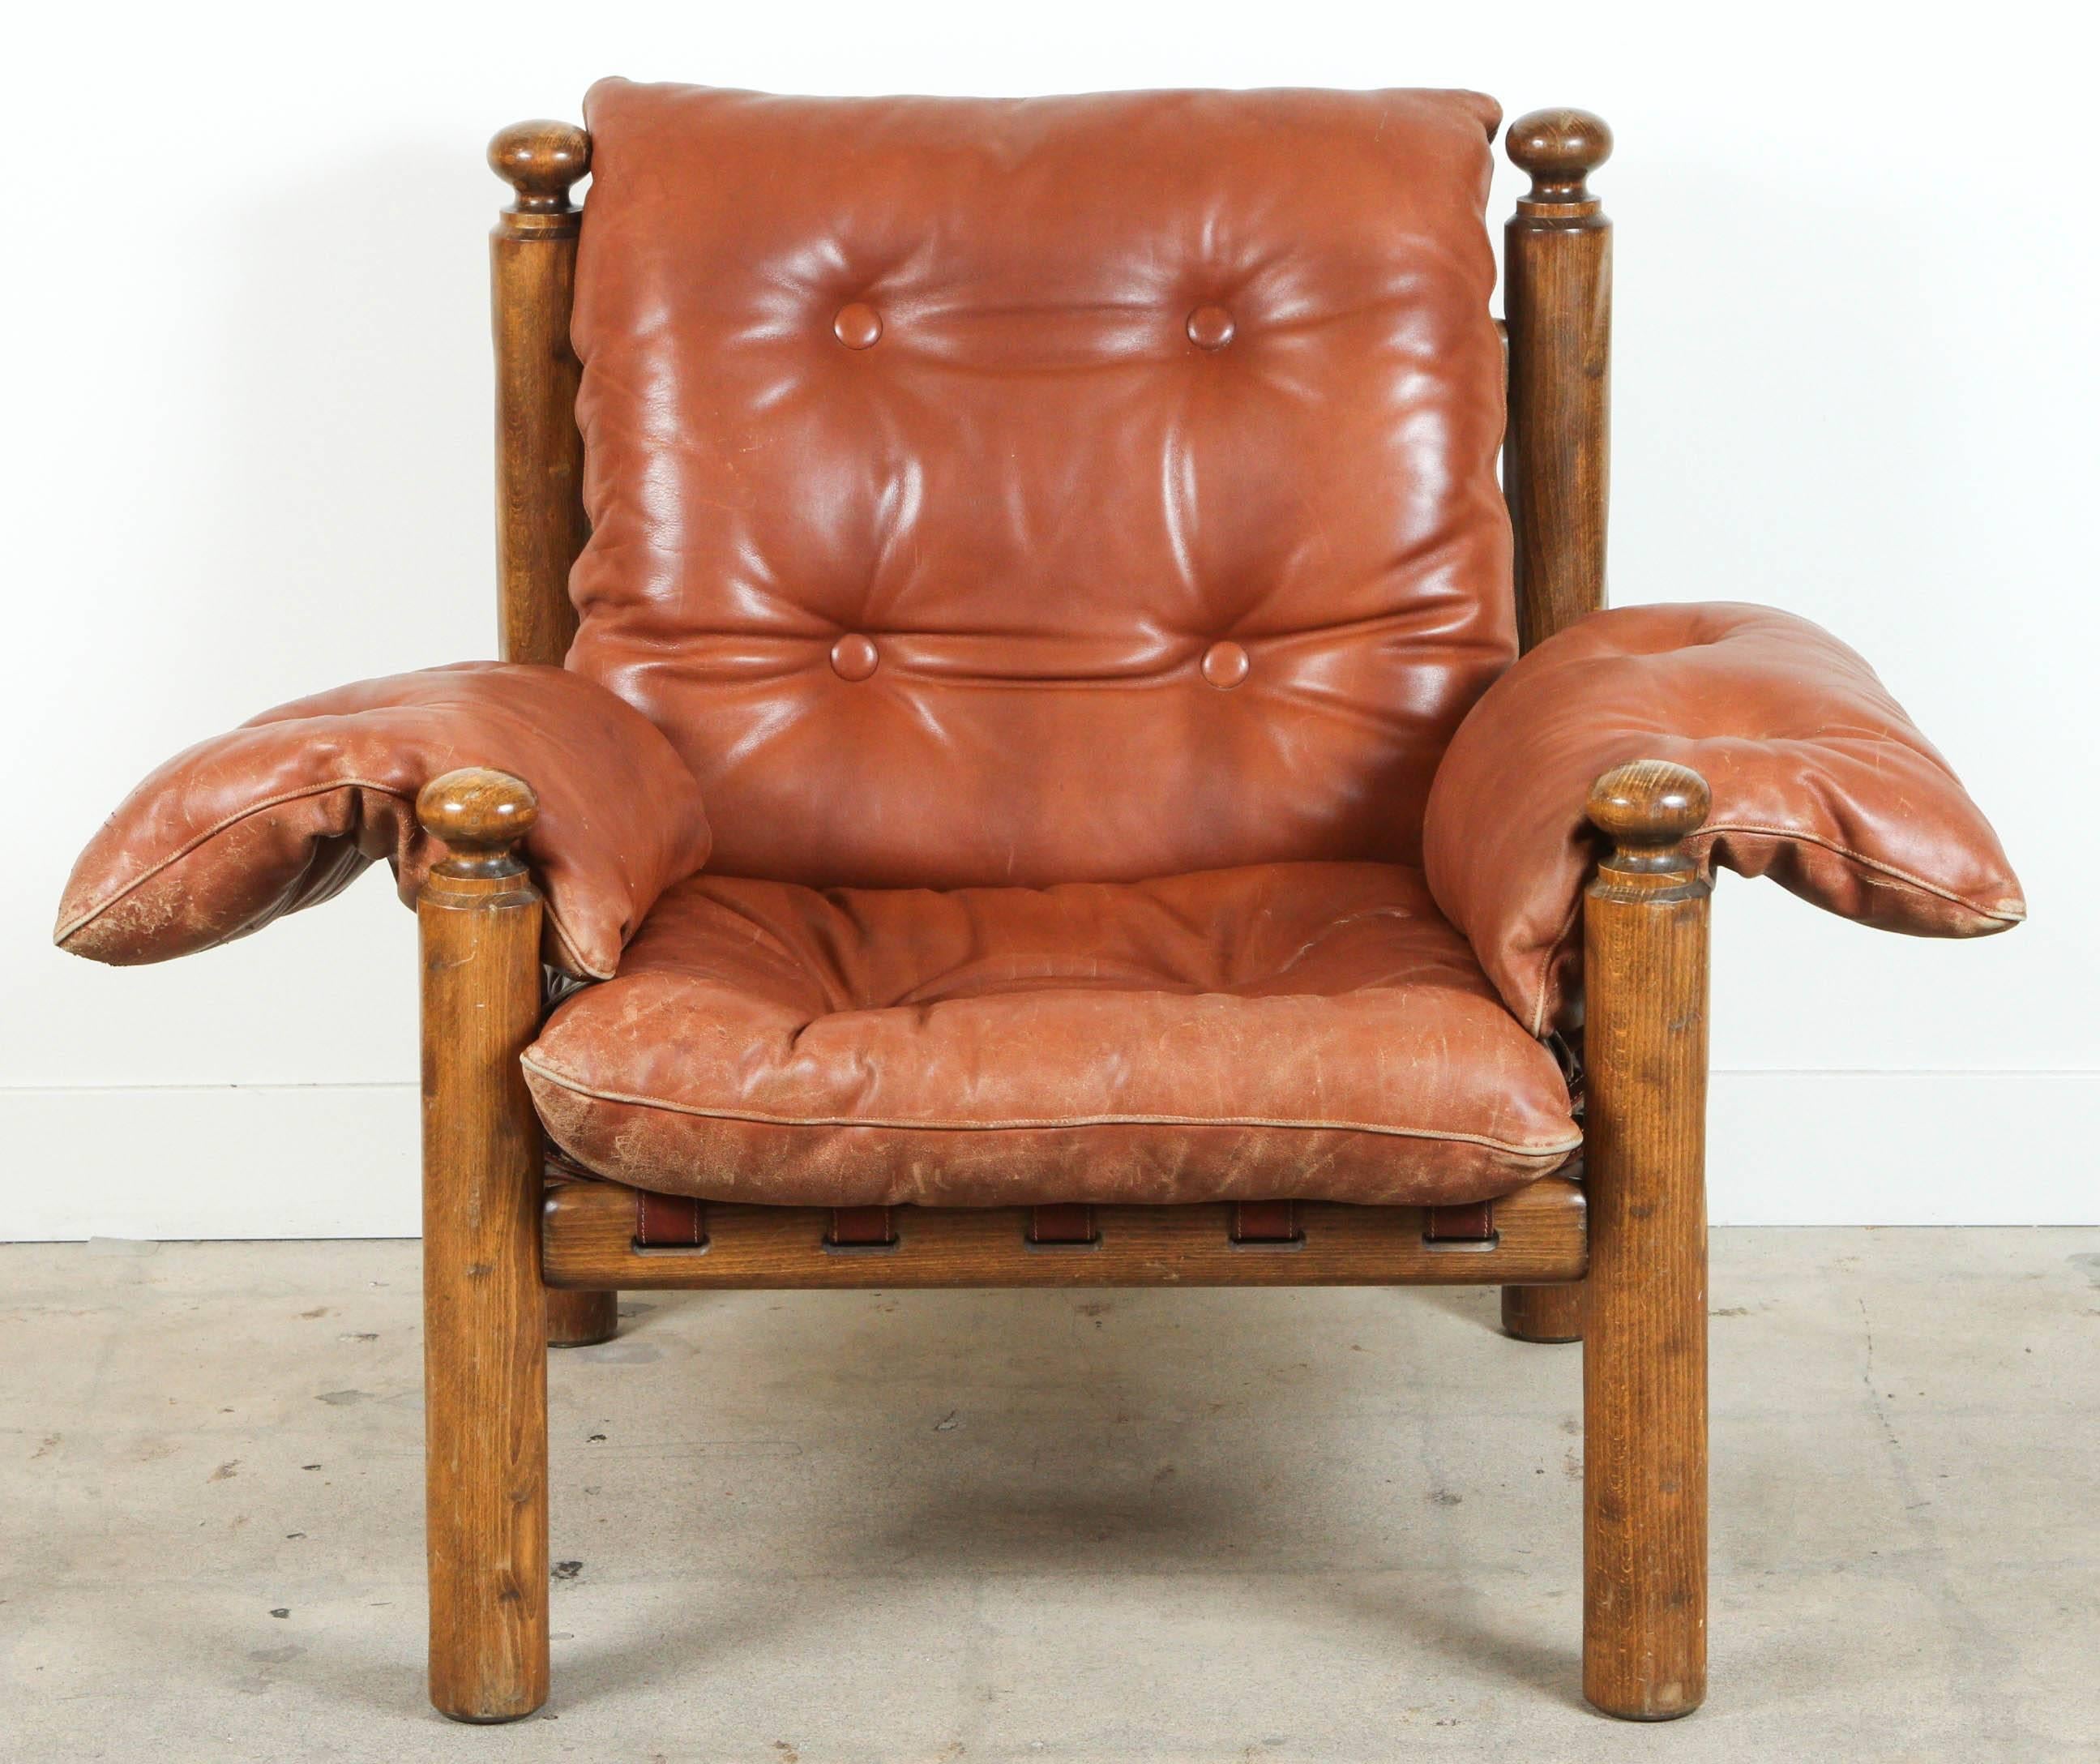 Longhi-parma Italian leather lounge chair.